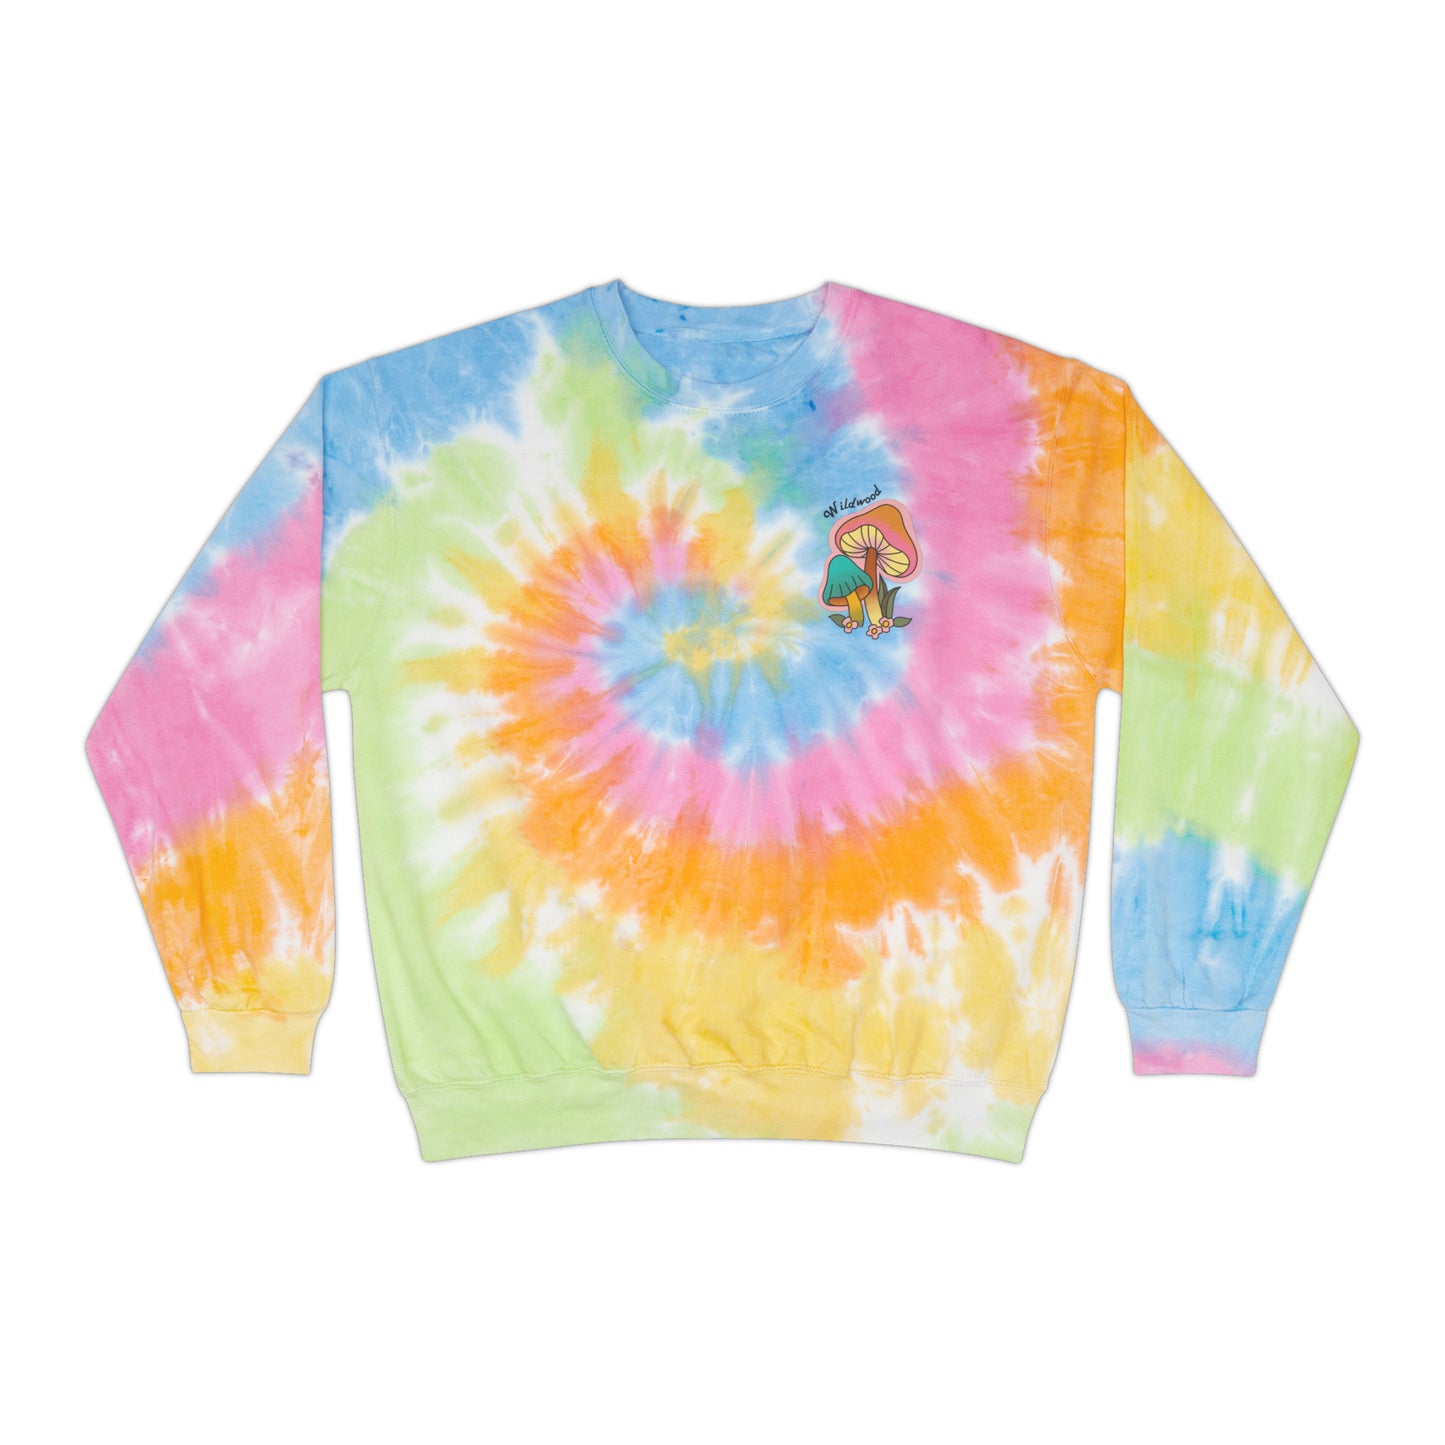 Wildwood Retro Mushroom Hippy Unisex Tie-Dye Sweatshirt